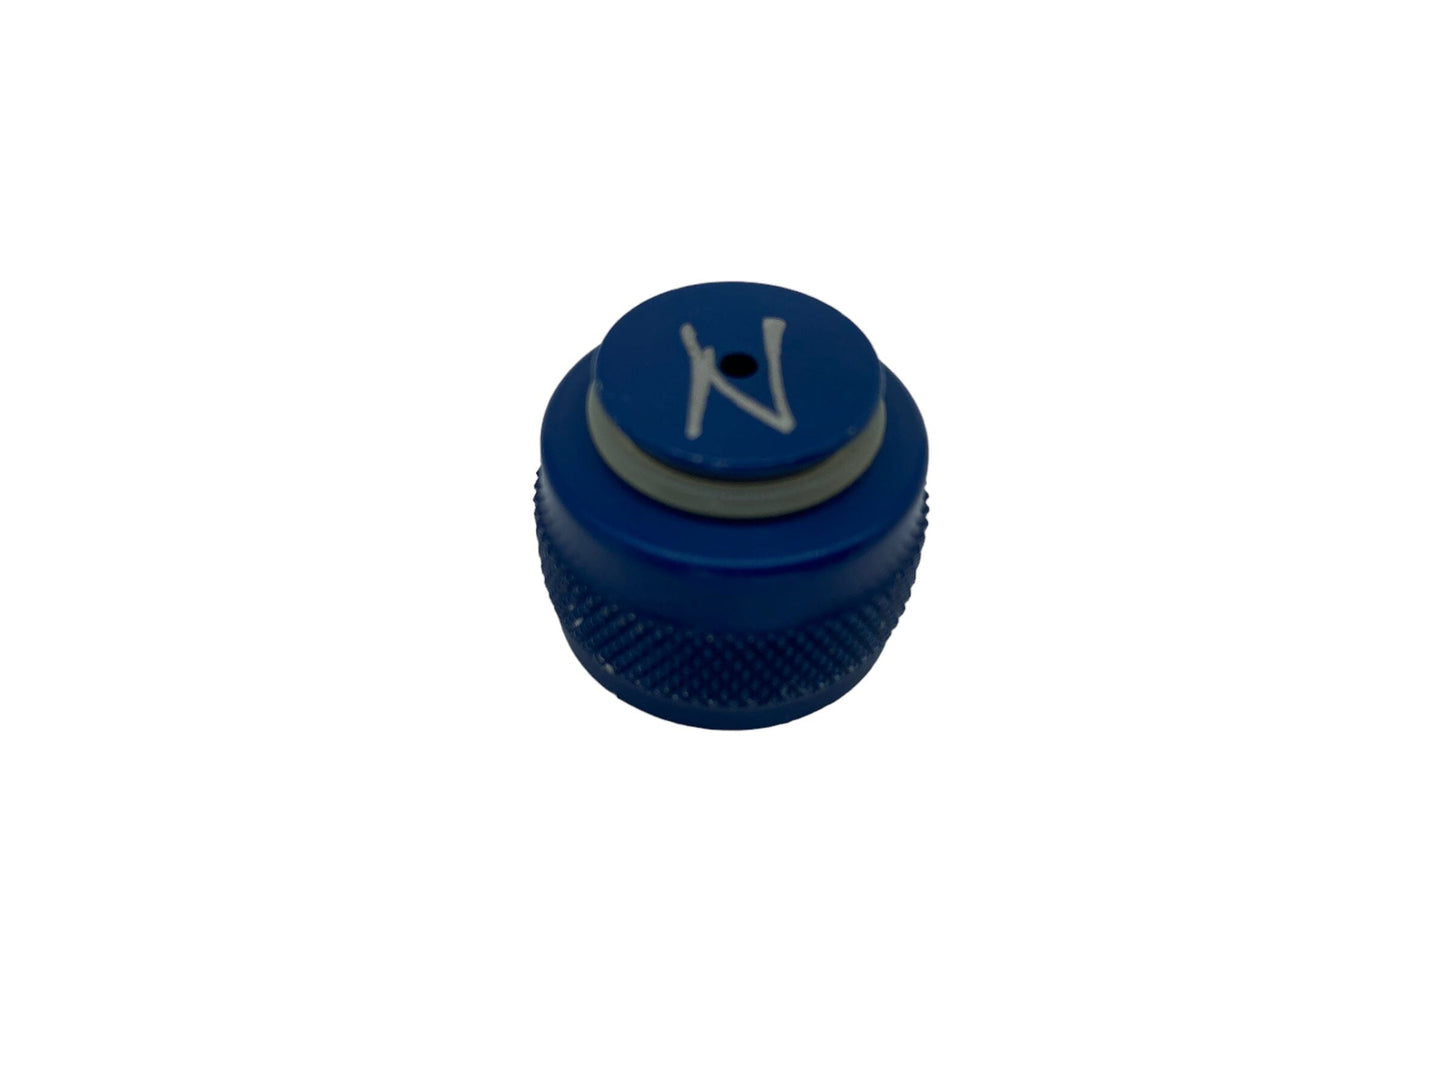 Used Ninja Tank Regulator Thread Saver BLUE Paintball Gun from CPXBrosPaintball Buy/Sell/Trade Paintball Markers, New Paintball Guns, Paintball Hoppers, Paintball Masks, and Hormesis Headbands